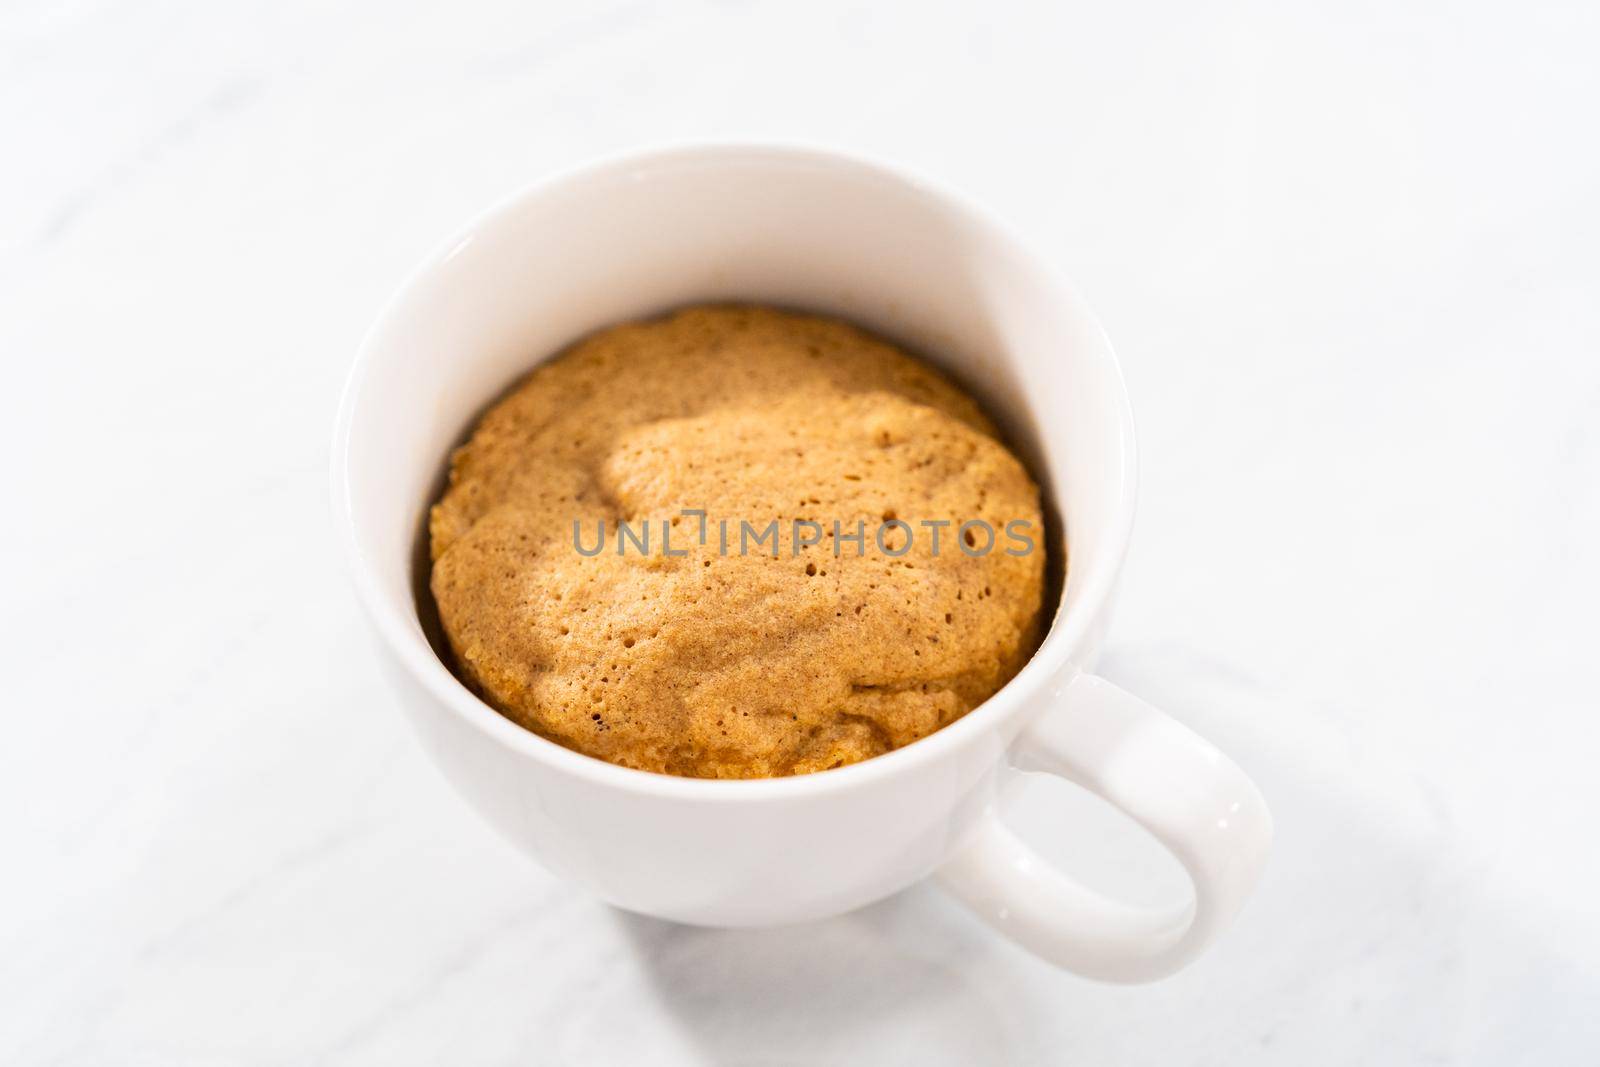 Freshly made to prepare pumpkin mug cake in a large white mug.